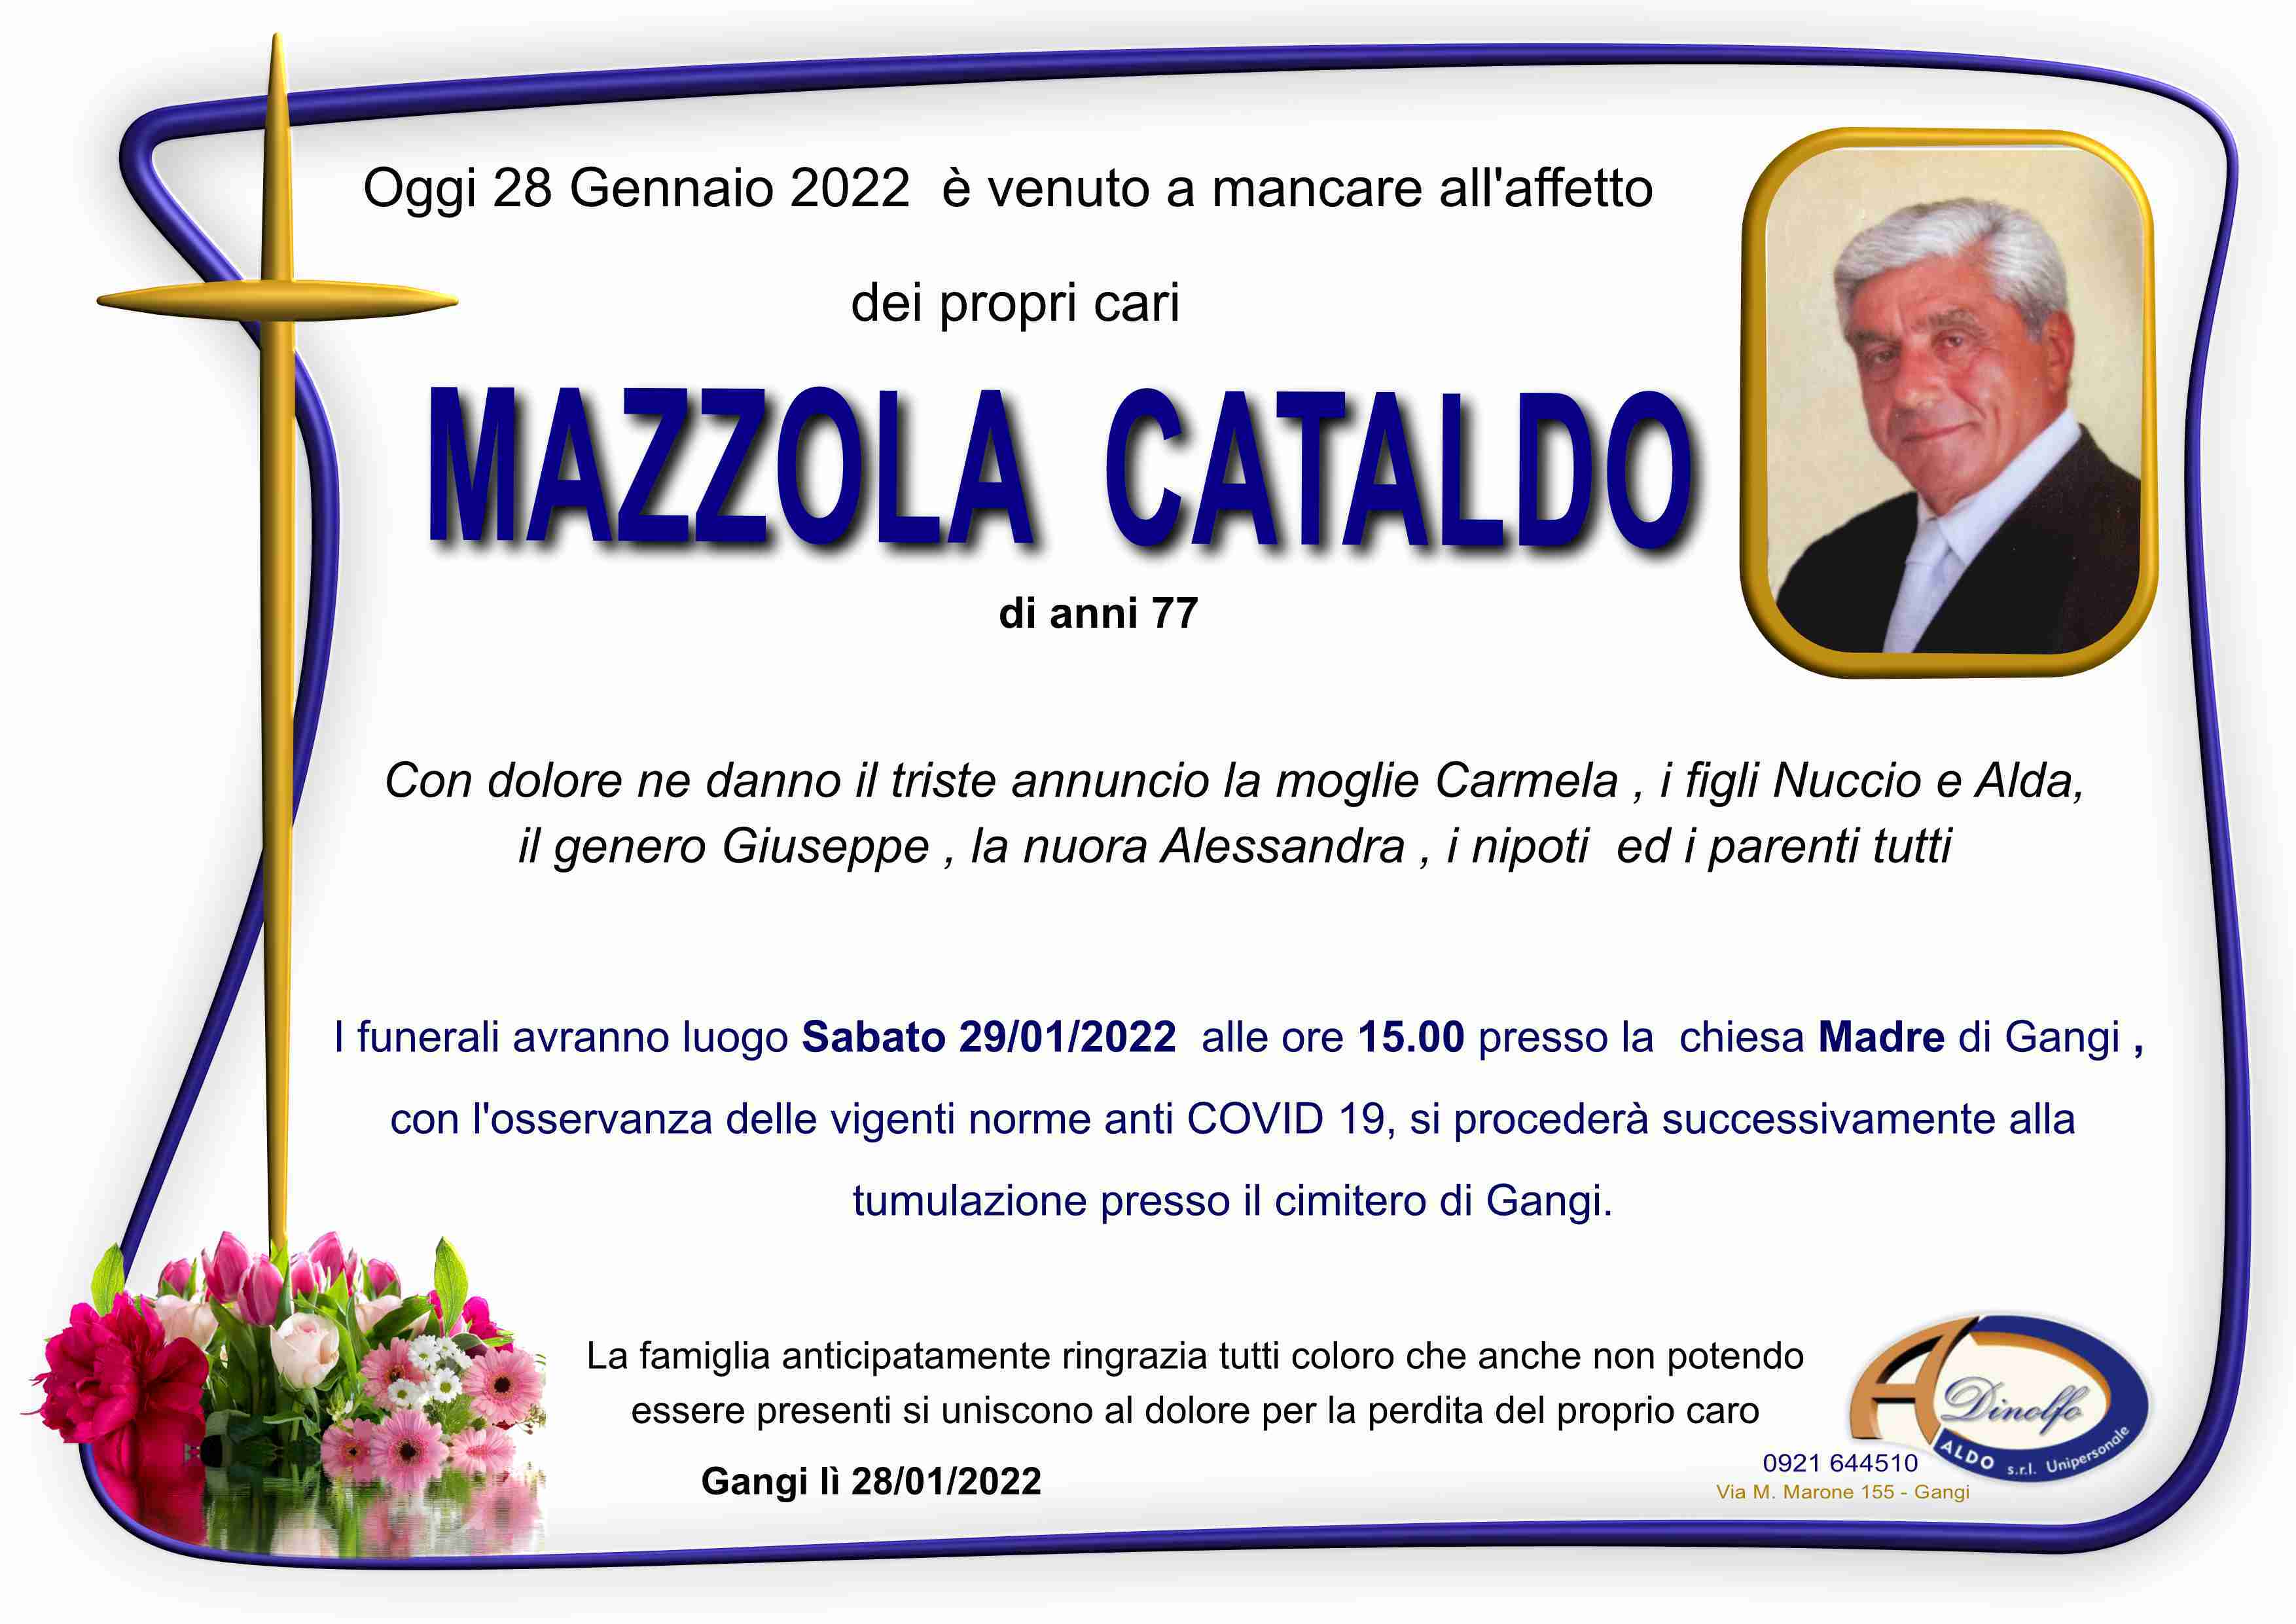 Cataldo Mazzola